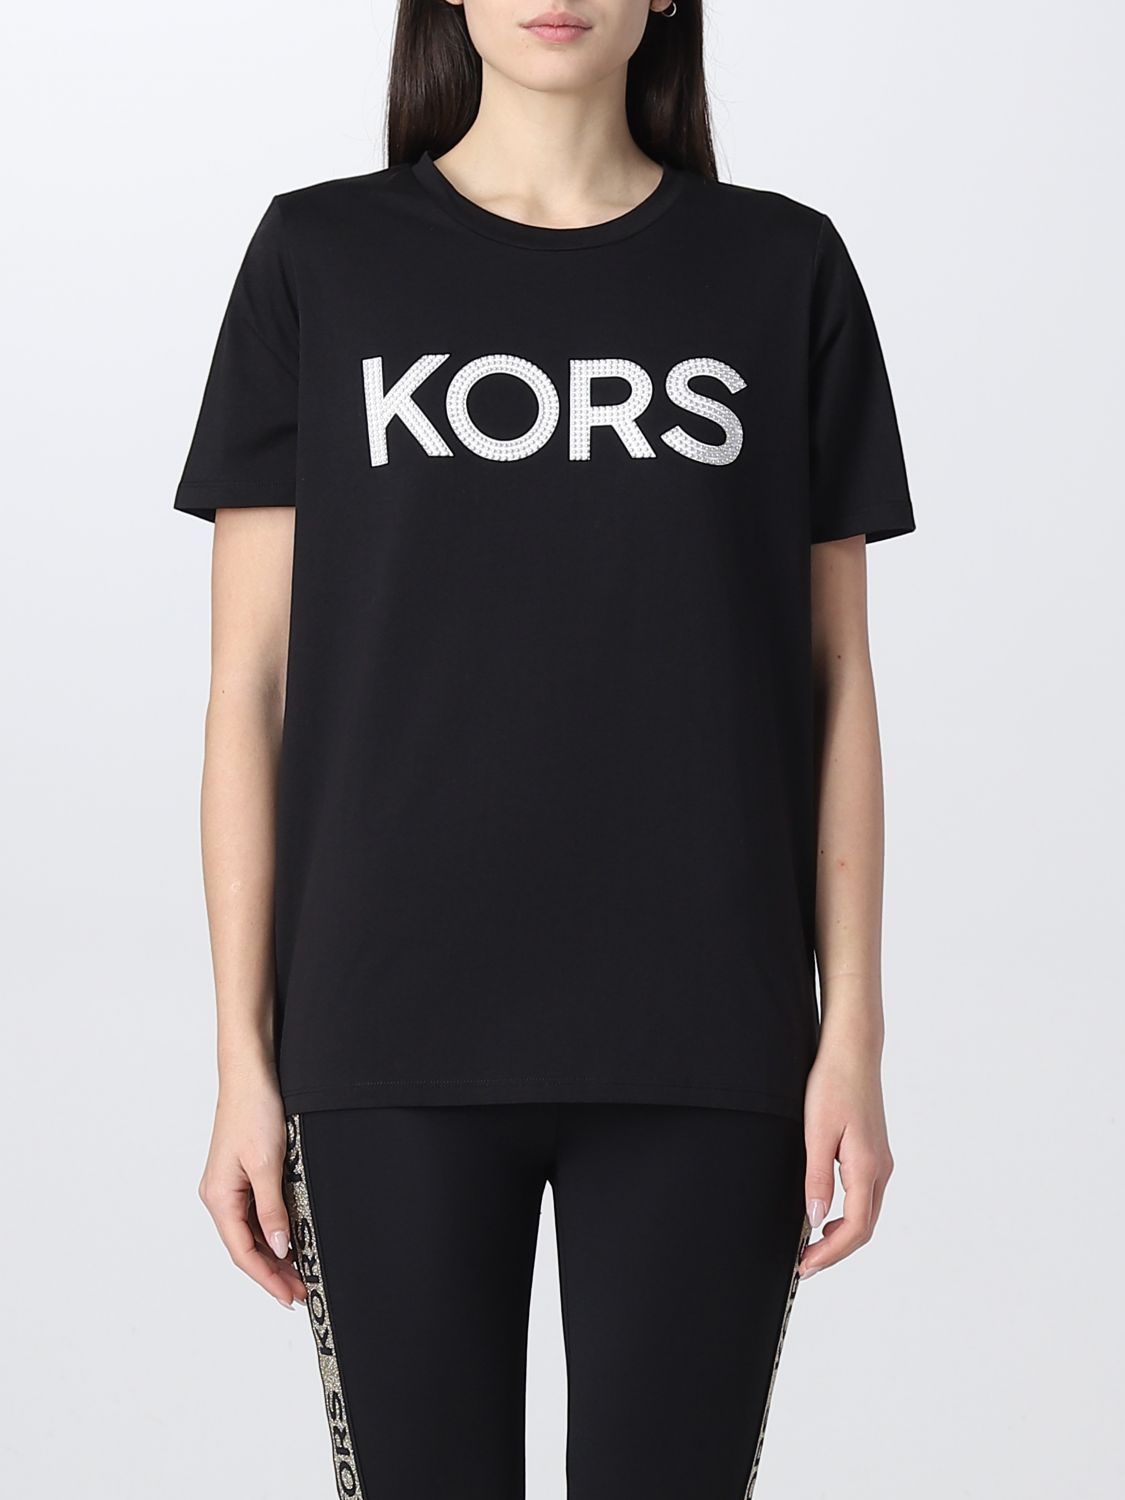 MICHAEL KORS: t-shirt for woman - Black 1 | Michael Kors t-shirt MB95MP197J  online on 